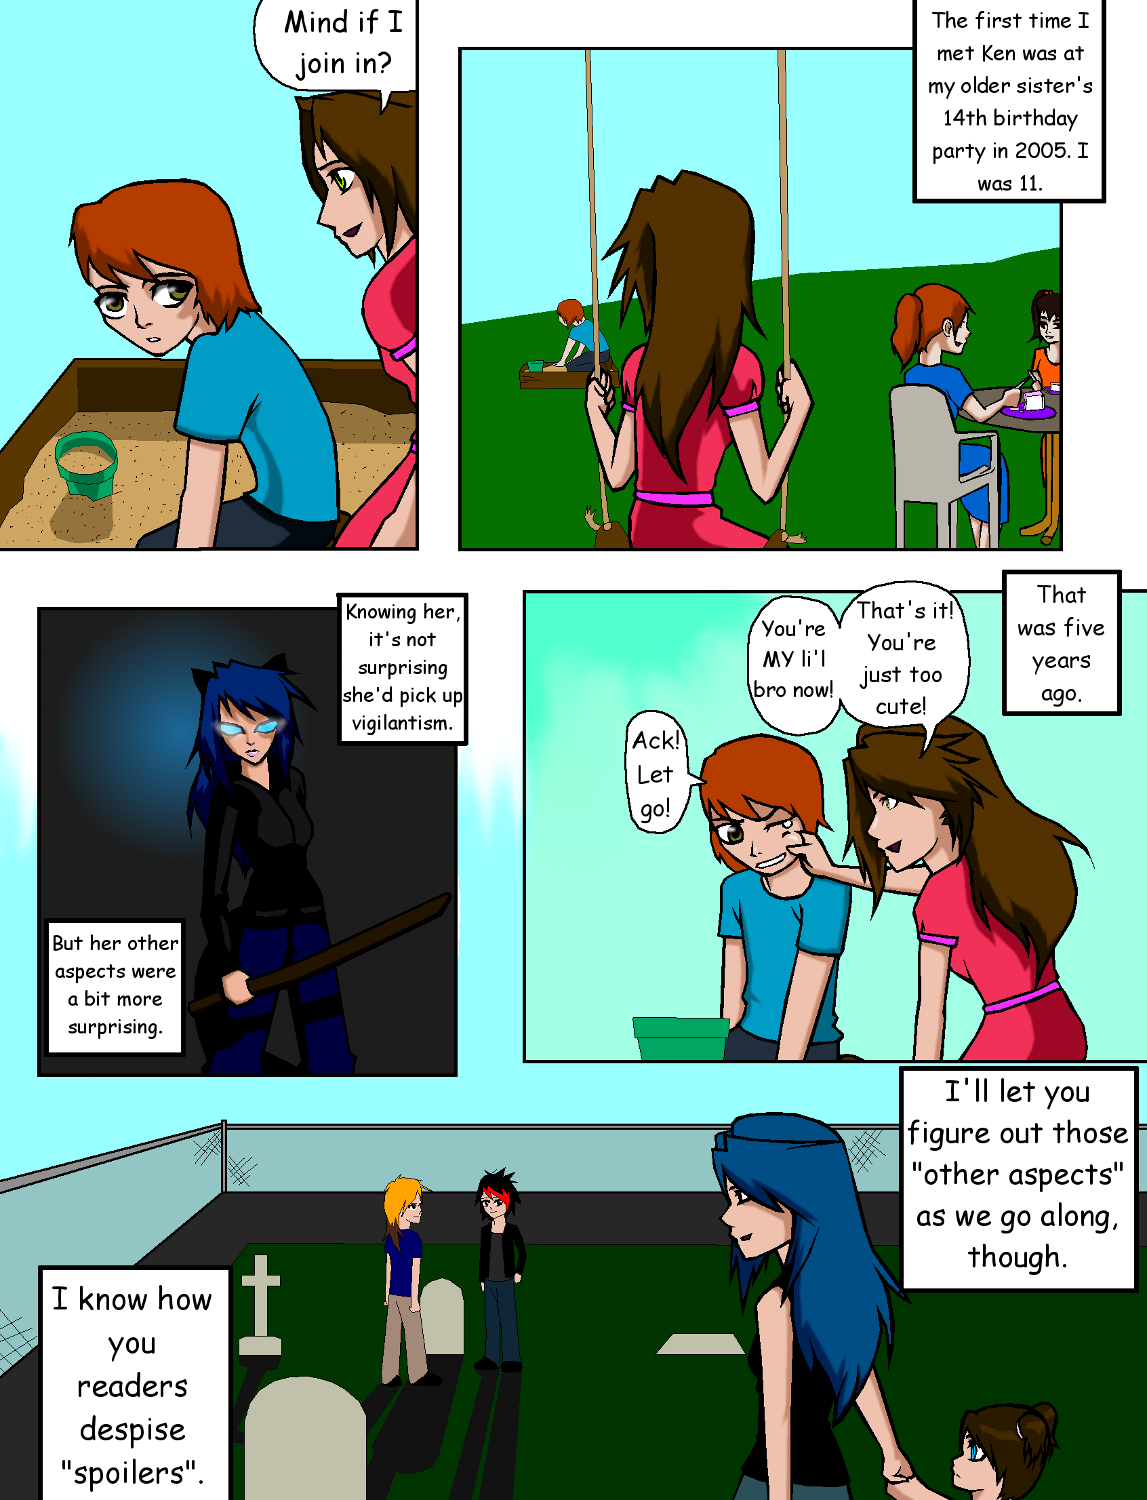 Ninth Life - Page 1 REDO by aeris7dragon